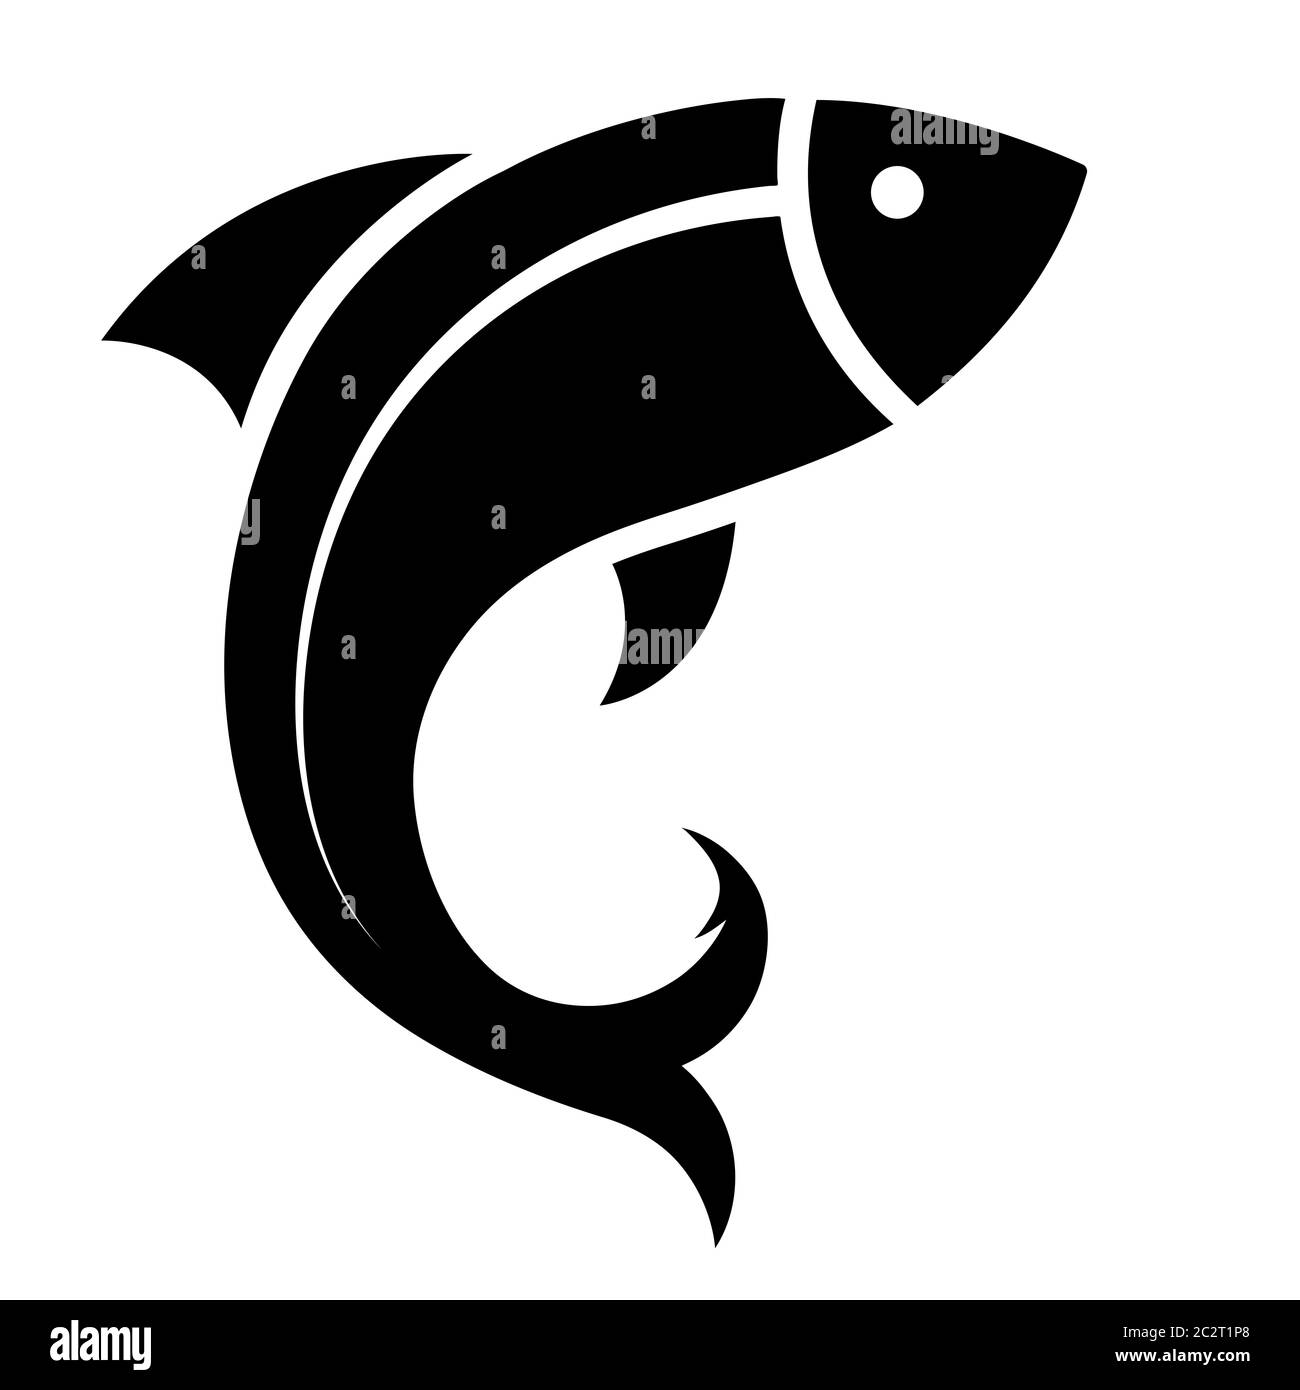 Fish logo Black and White Stock Photos & Images - Alamy